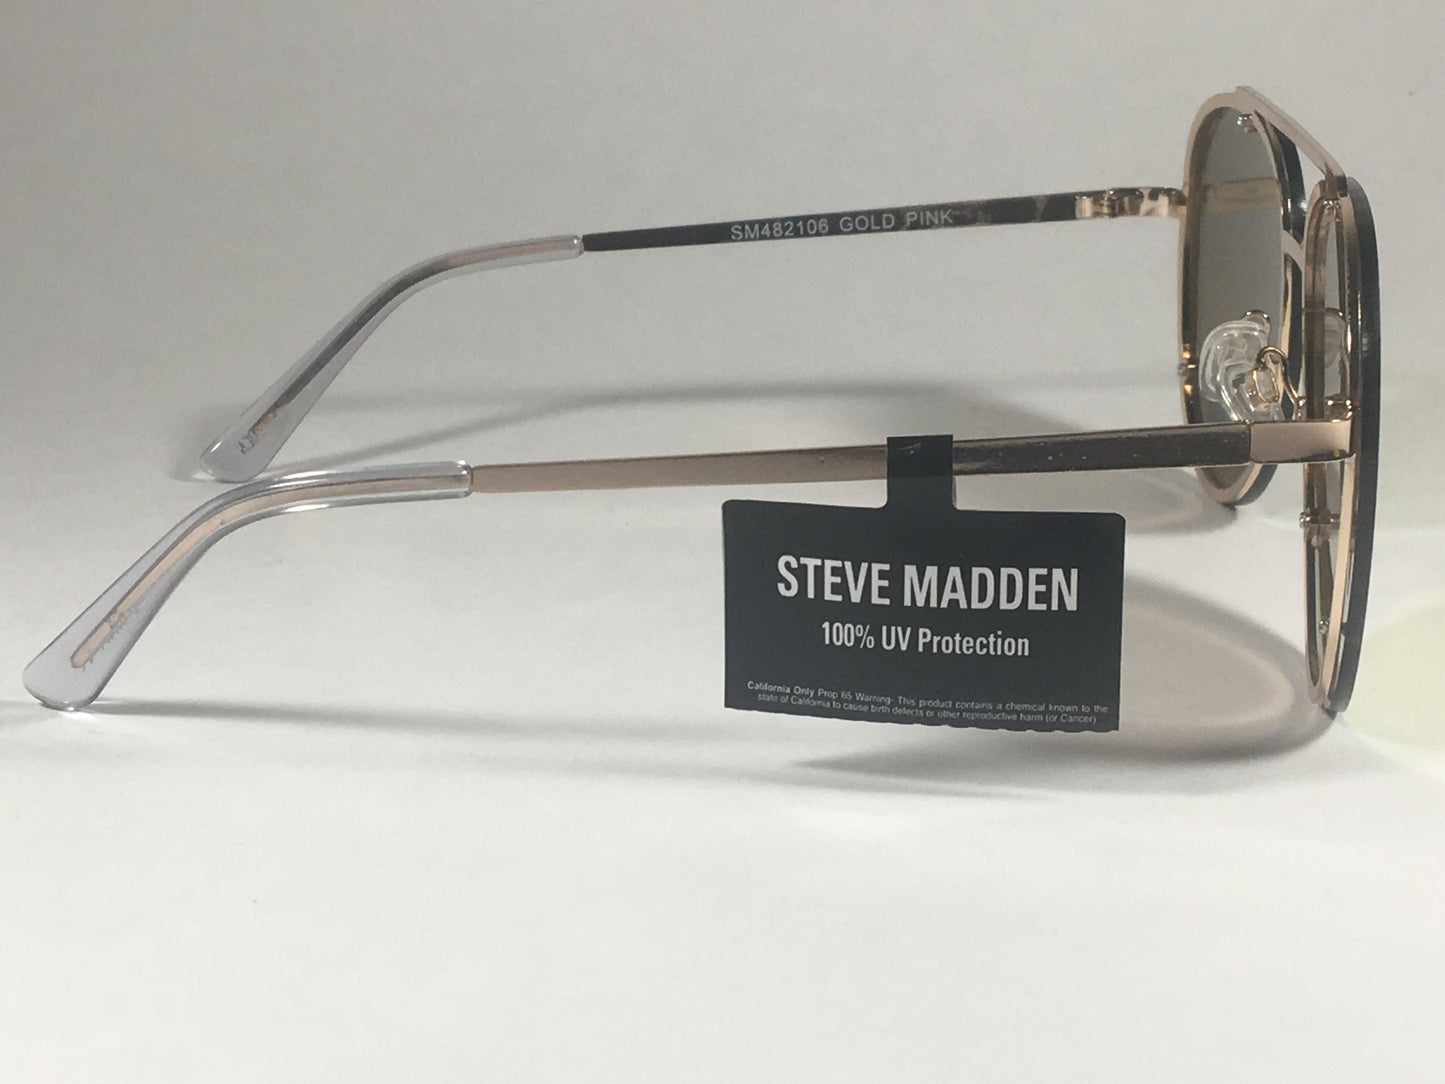 Steve Madden Rimless Aviator Pilot Sunglasses Gold Pink Orange Mirror Sm482106 Gldpn - Sunglasses